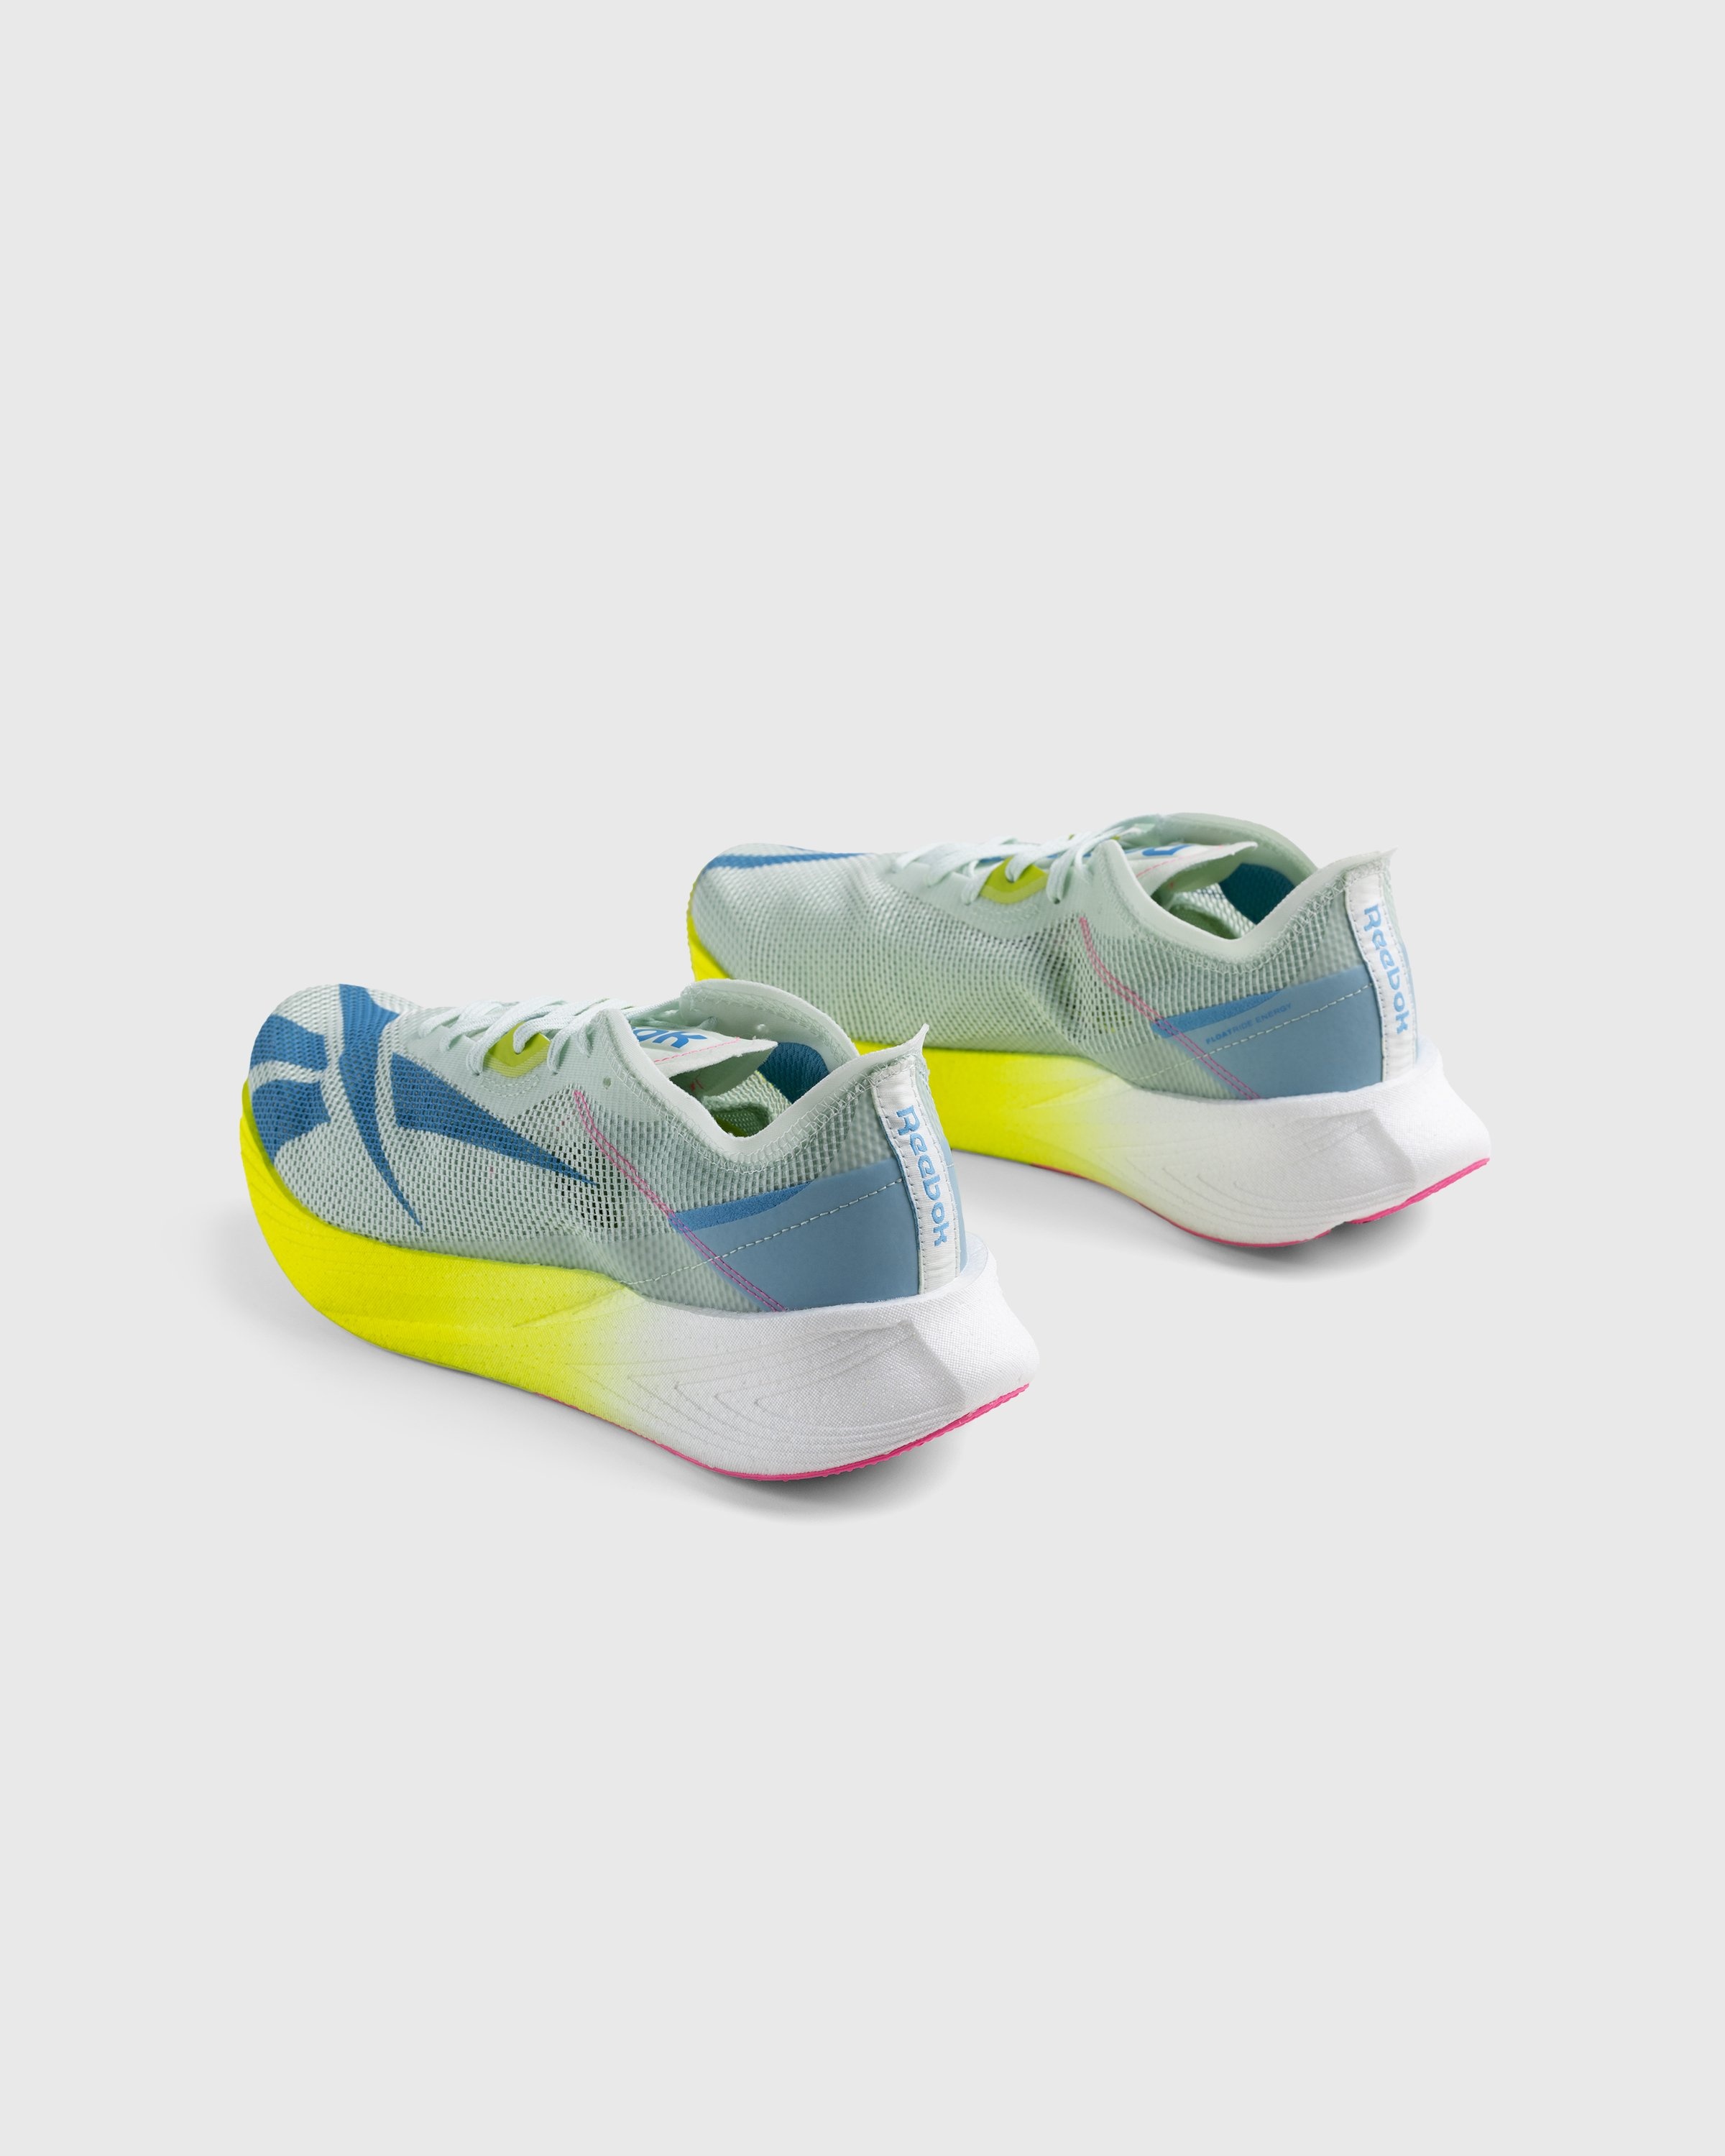 Reebok – Floatride Energy X Yellow/Blue - Sneakers - Multi - Image 5